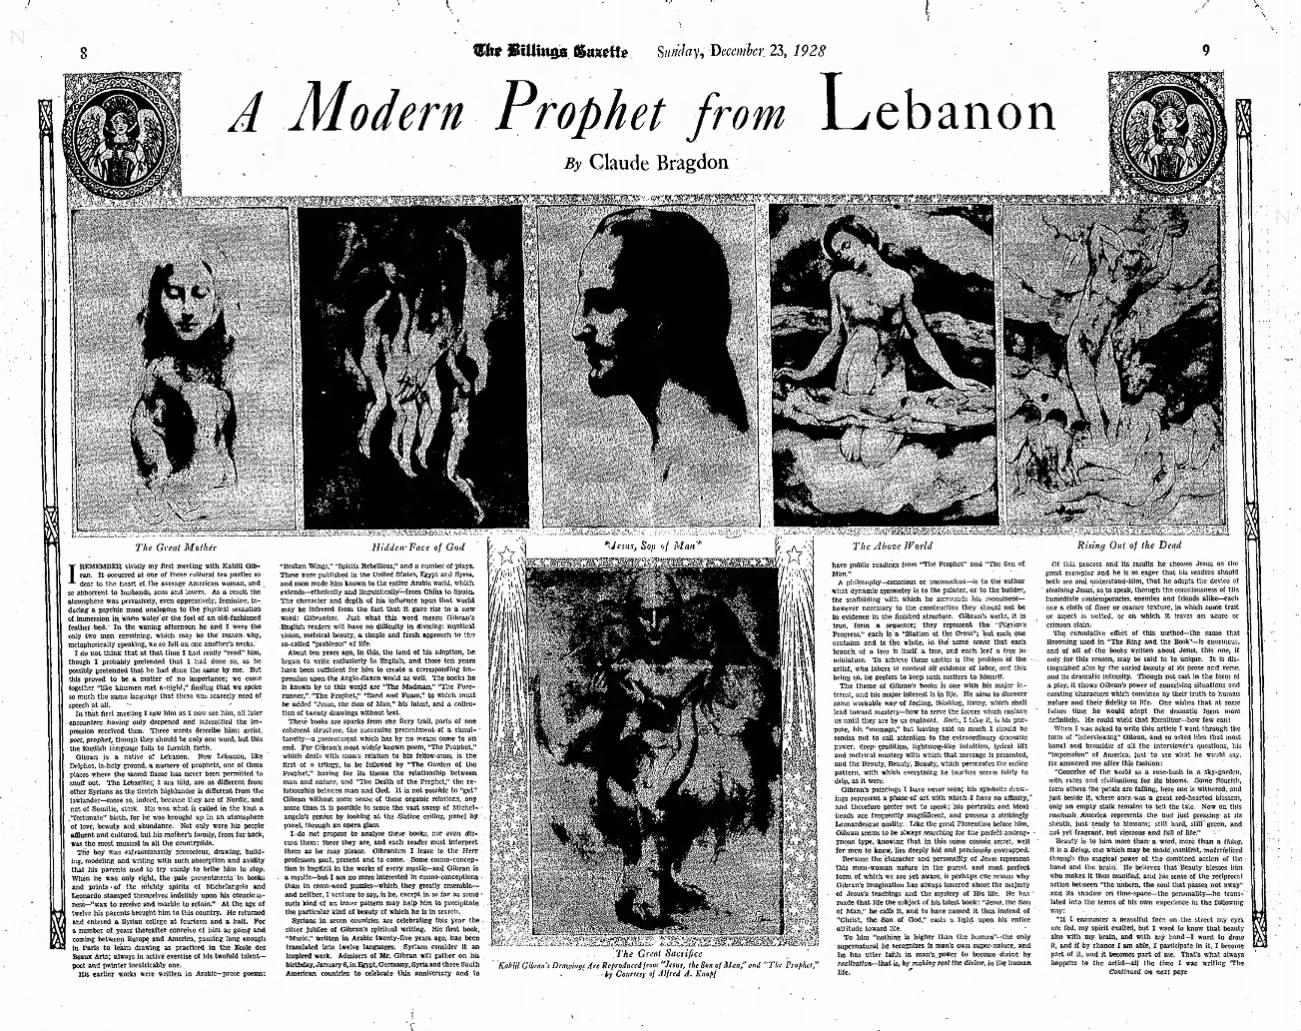 Claude Bragdon, A Modern Prophet from Lebanon, The Billings Gazette (Billings, Montana), Dec 21, 1928, p. 20.